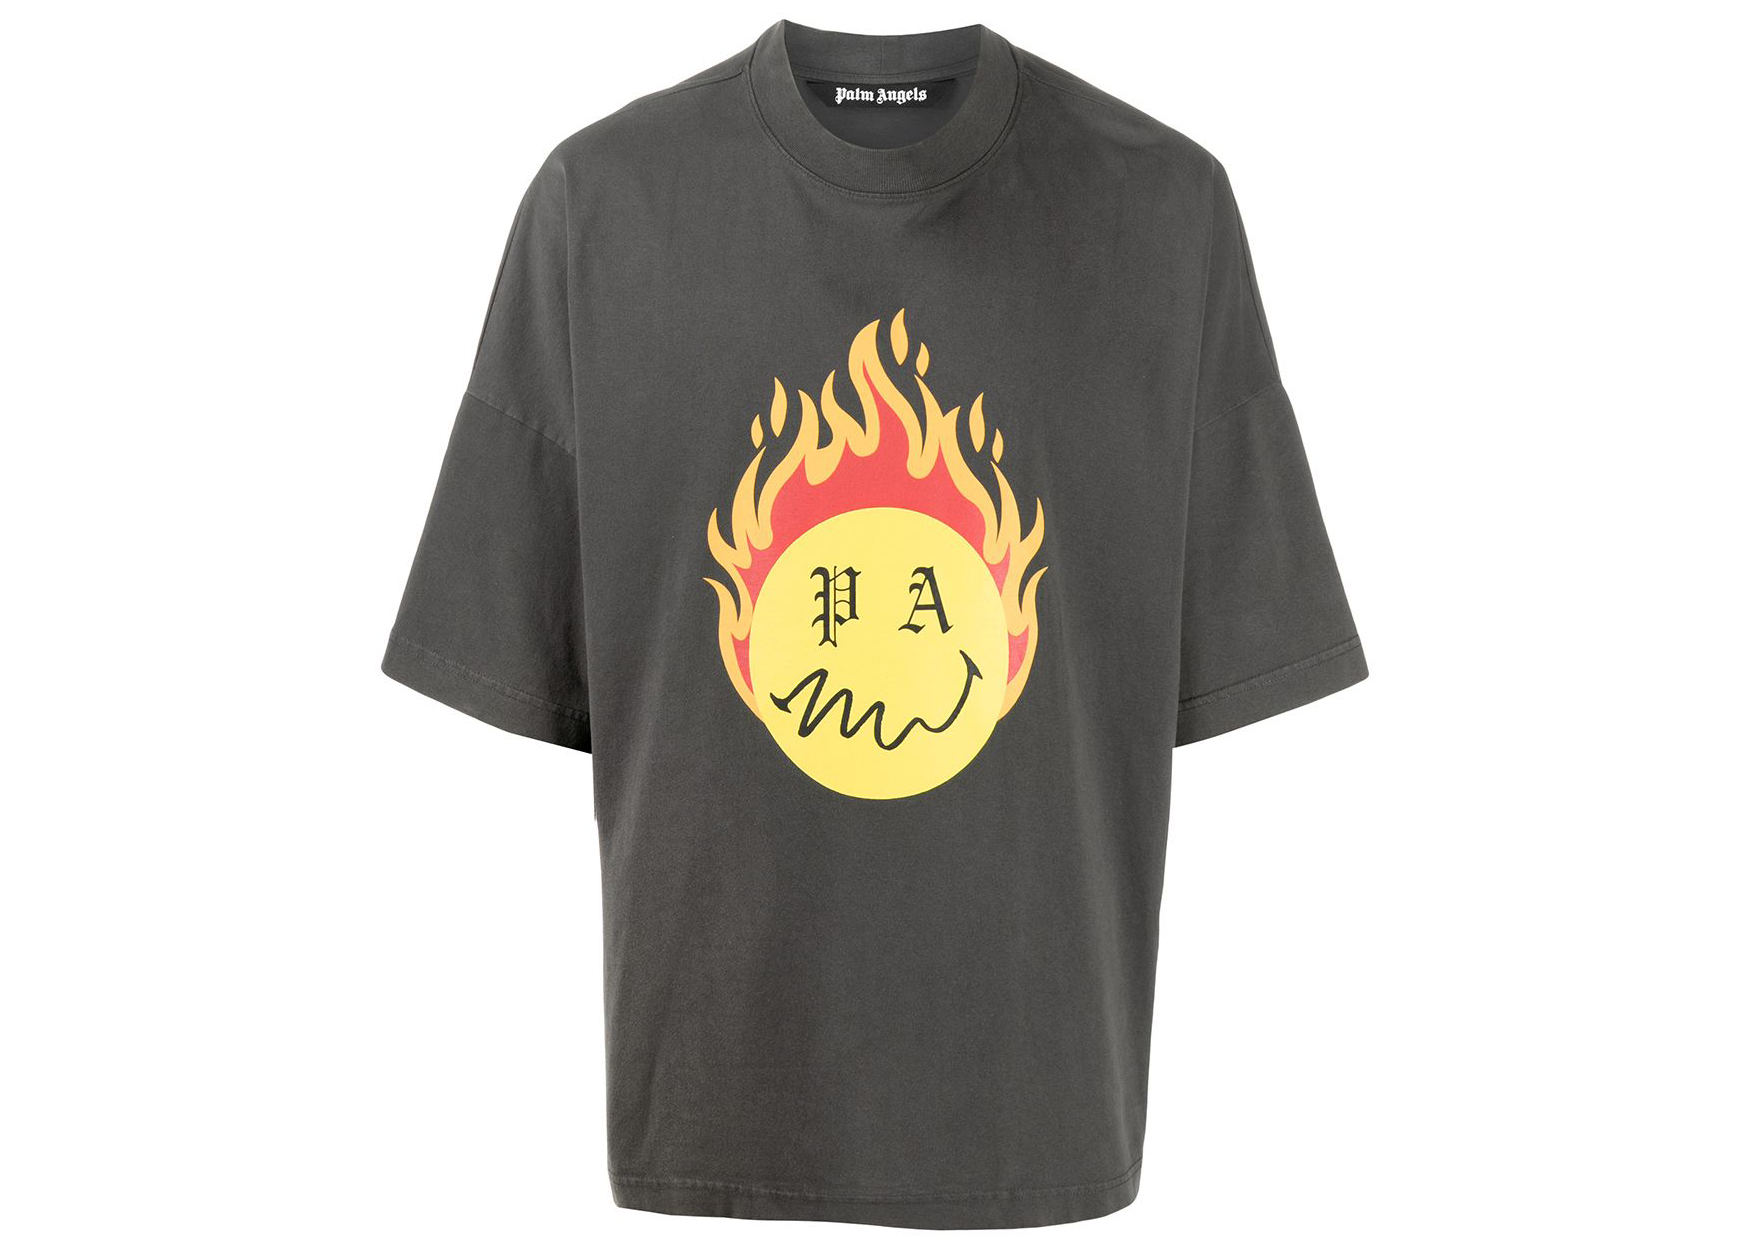 Palm Angels Burning Head T-shirt Black